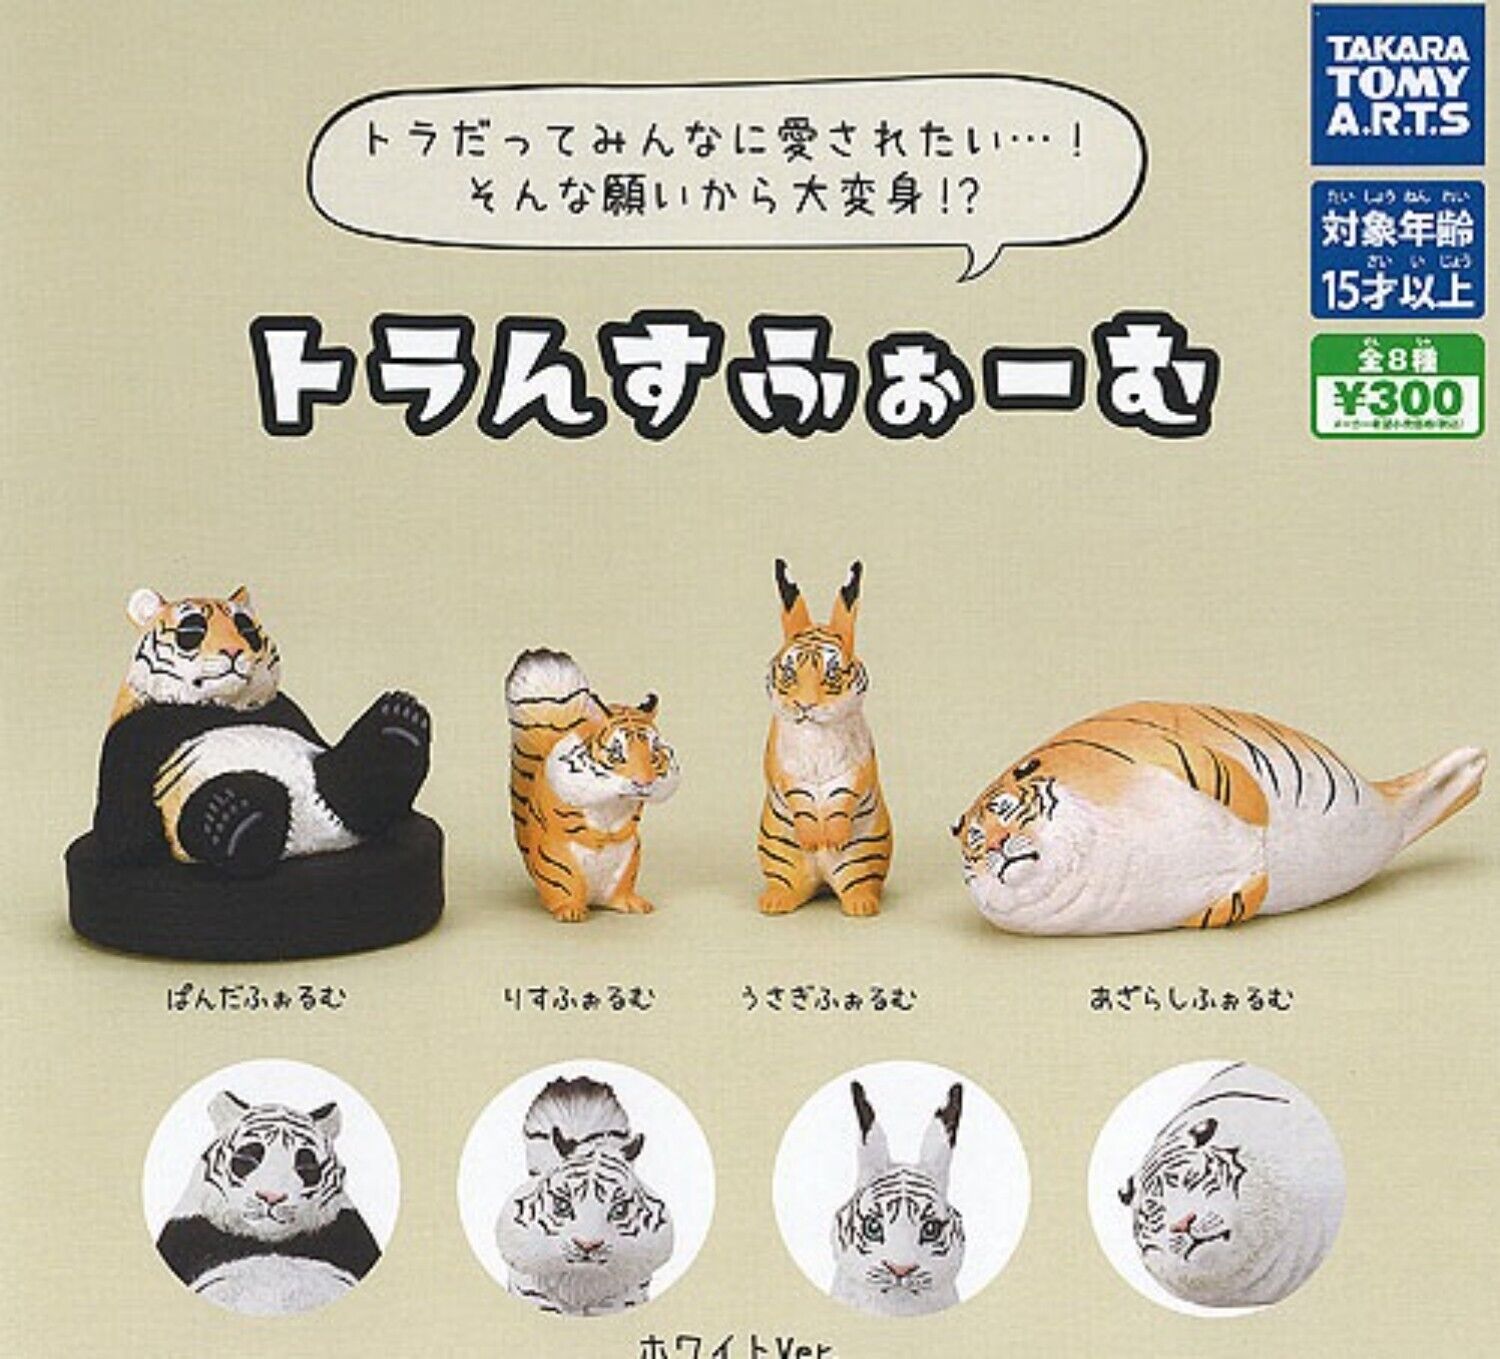 Toransform Tiger Figure Mascot Capsule Toy 8 Types Full Comp Set Gacha New Japan